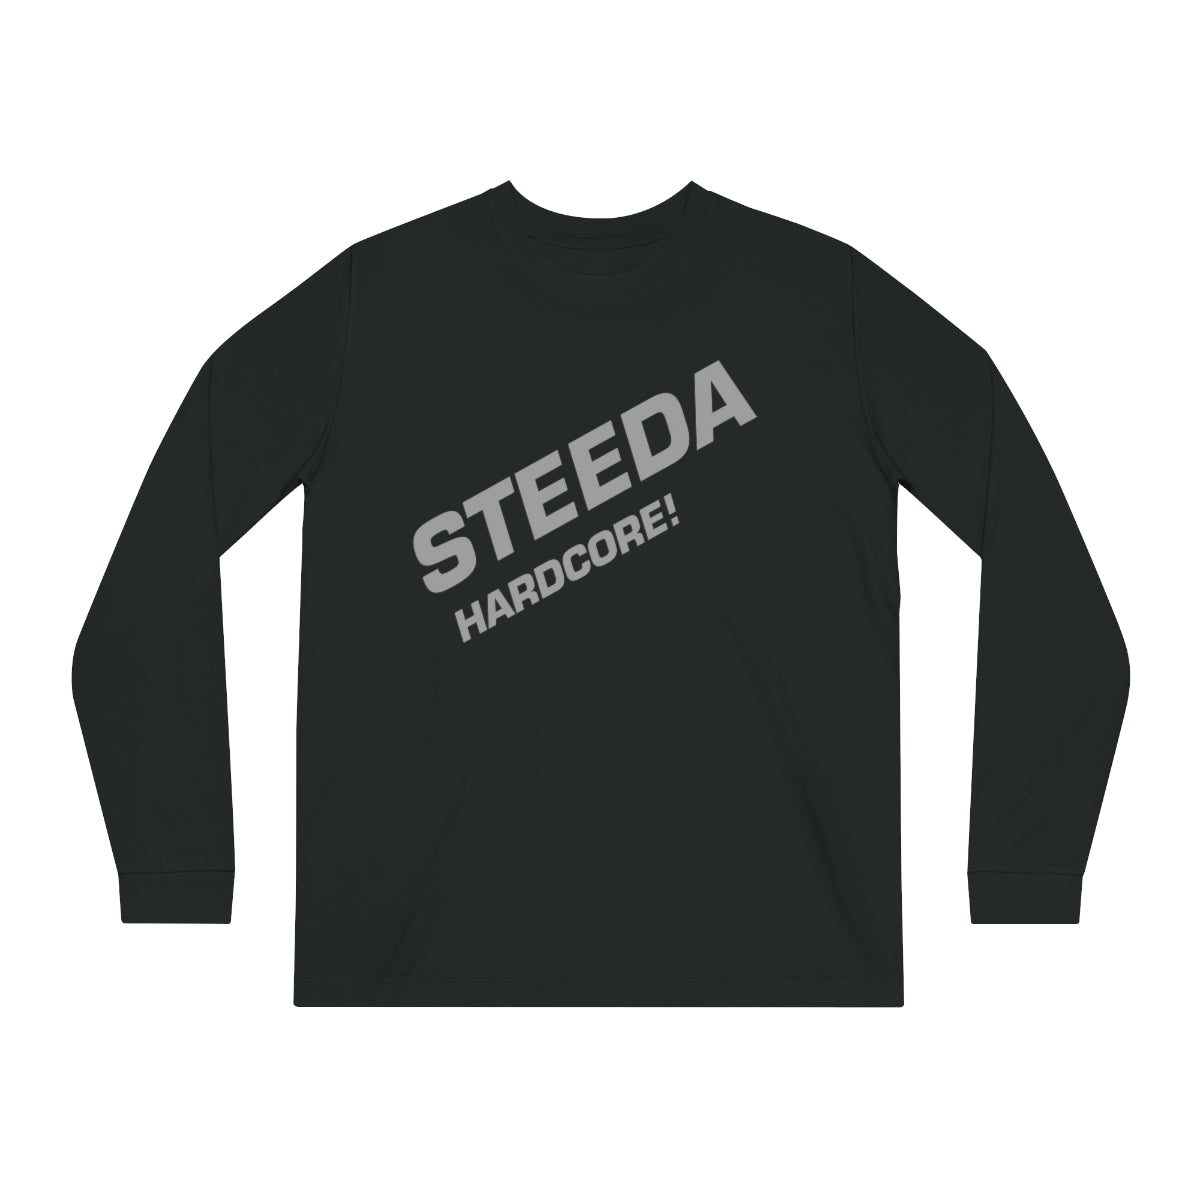 Steeda Unisexe "Hardcore!" T-shirt à manches longues - Noir / Marine